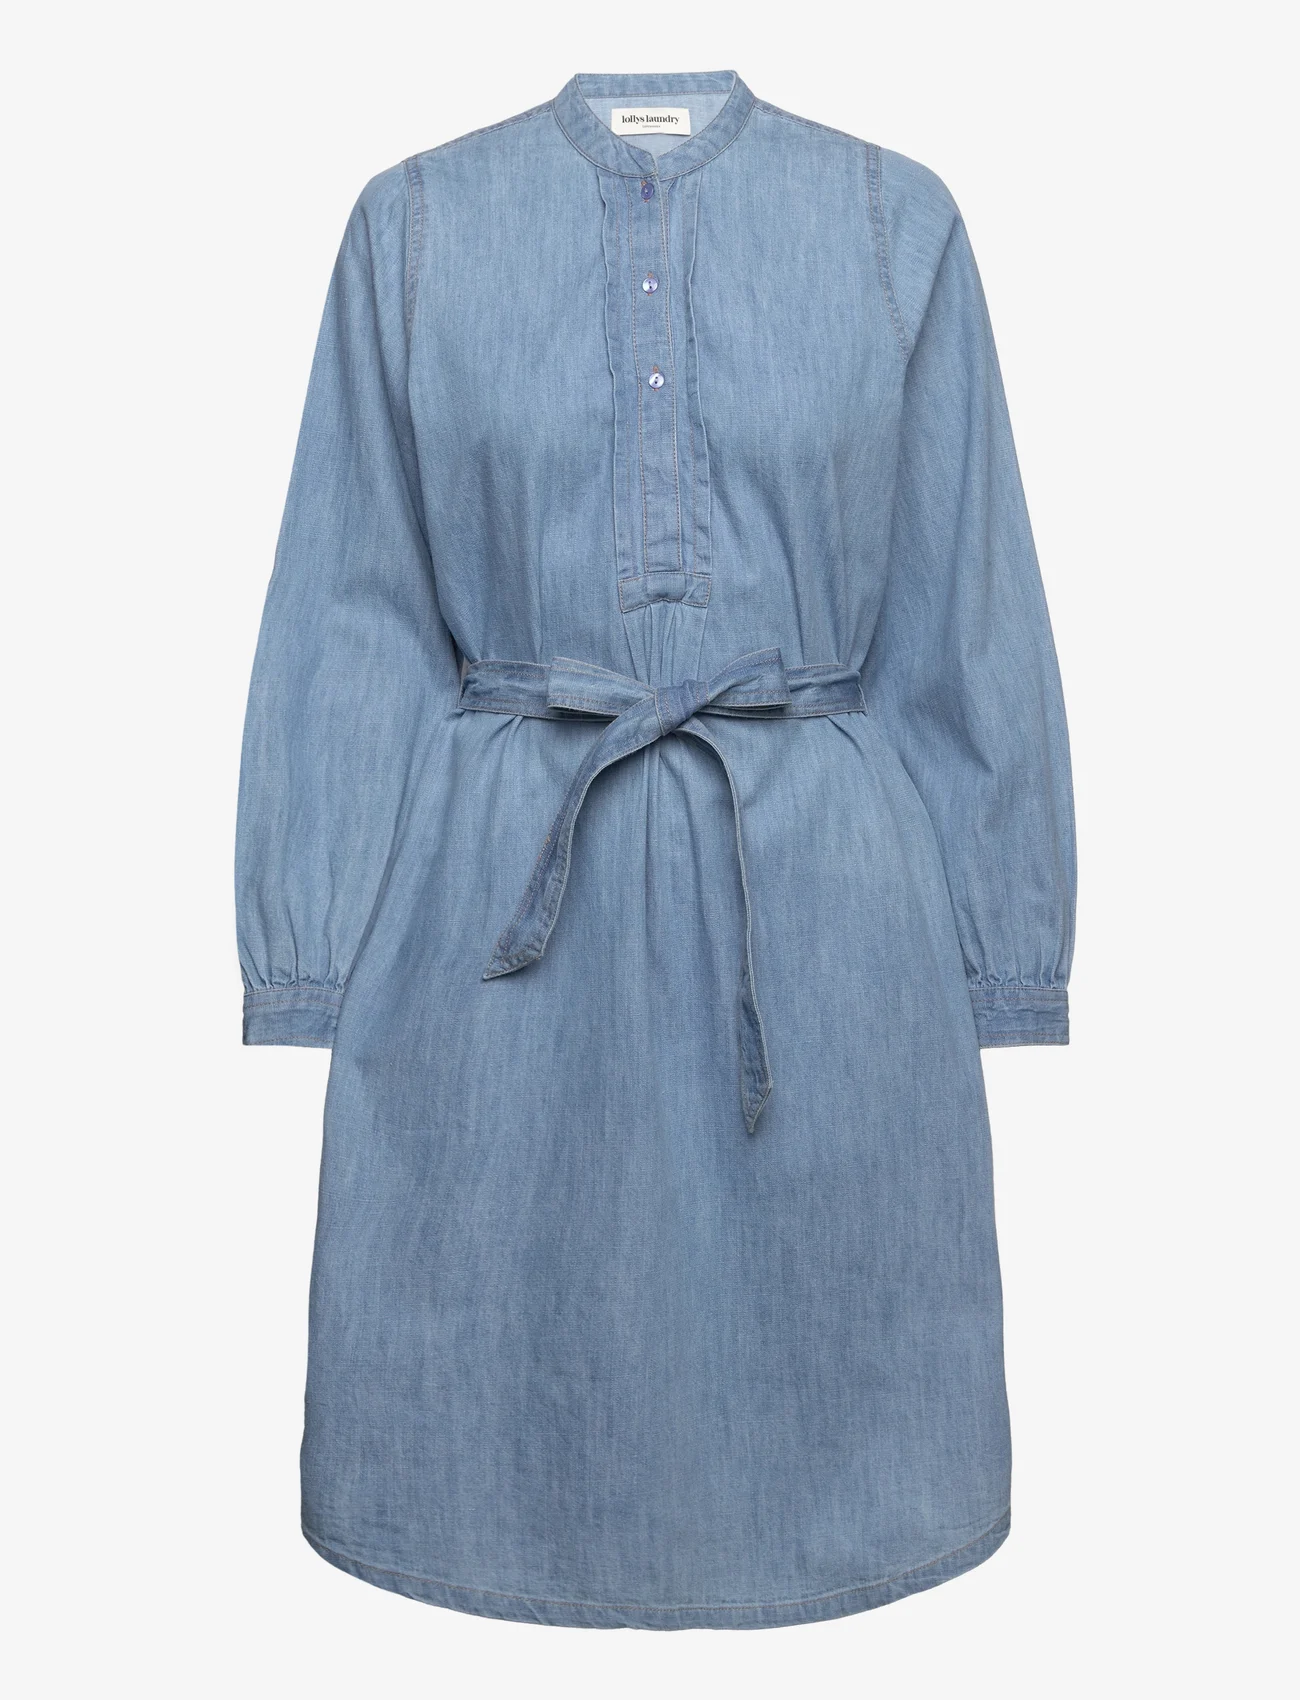 Lollys Laundry - Jade LS Dress - midikleider - light blue - 0